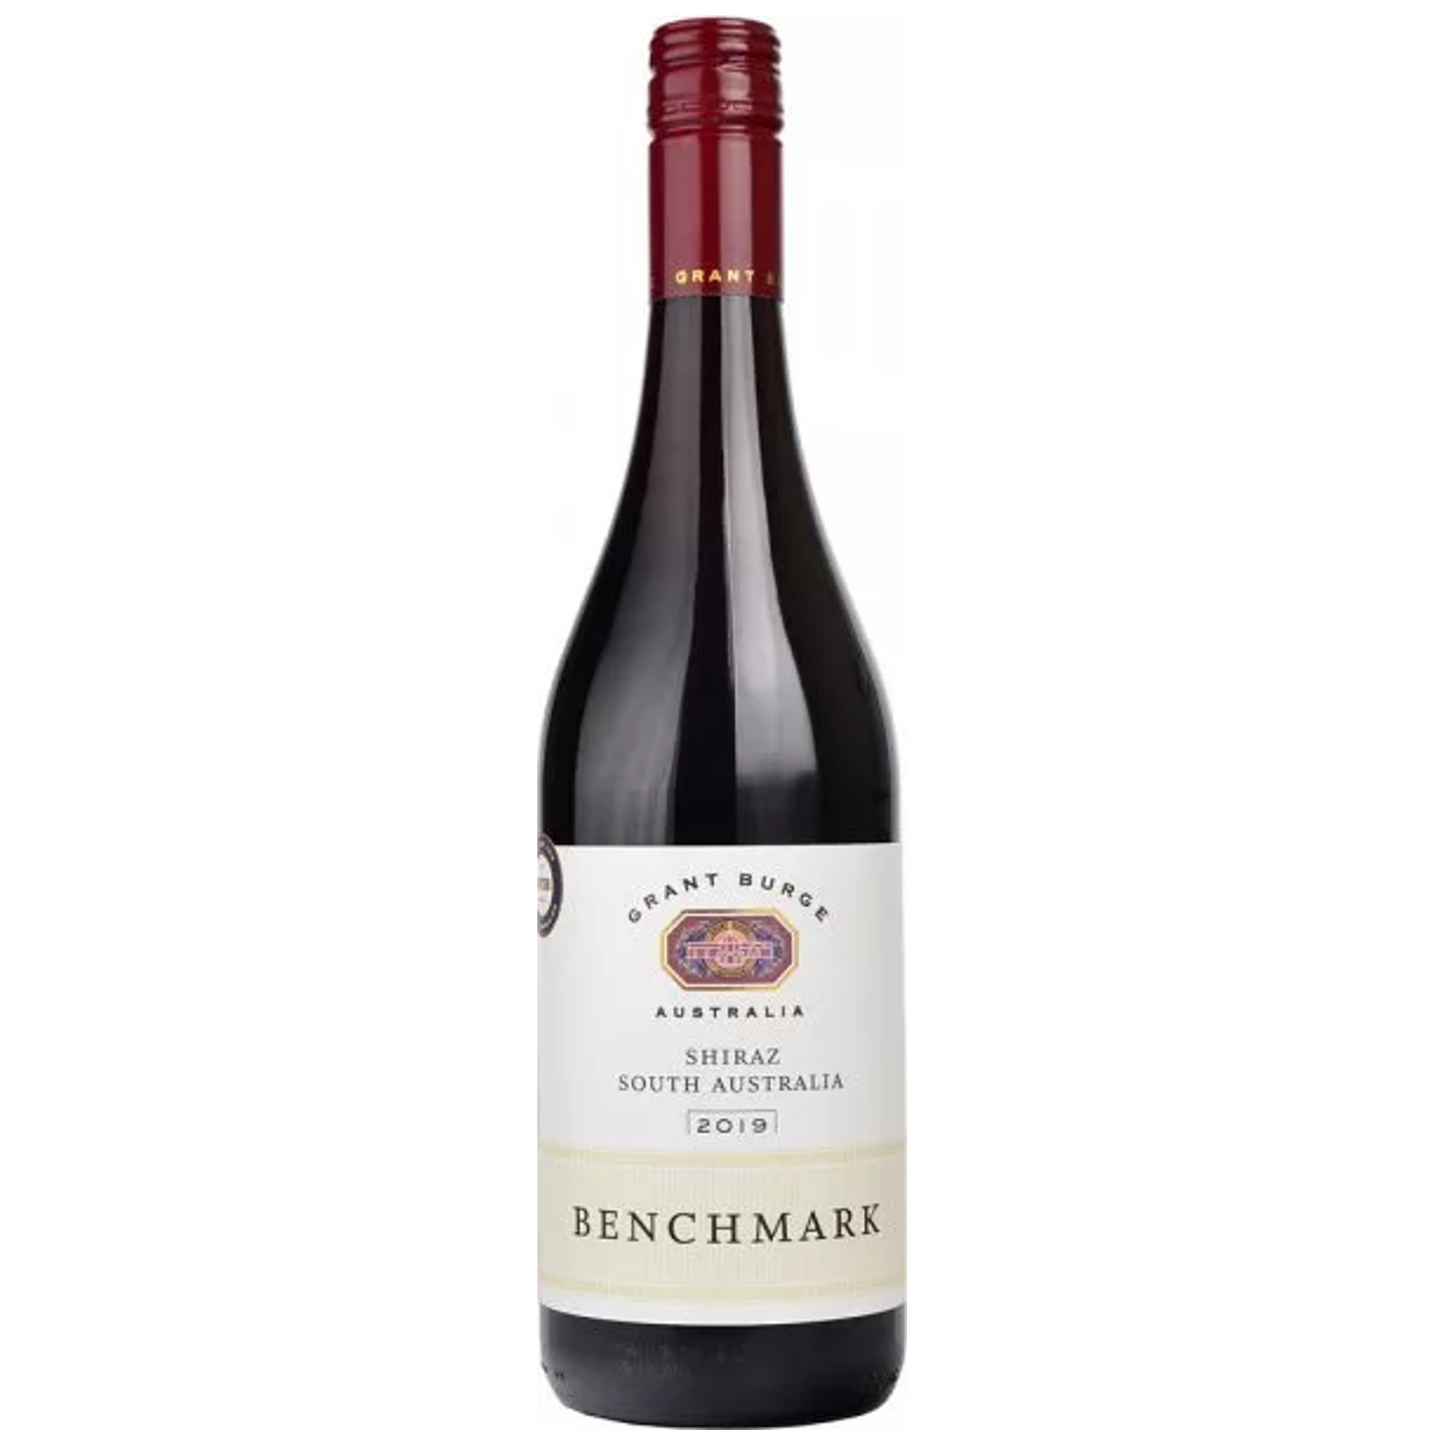 Selected Wine - Grant Burge Benchmark Shiraz South Australia 2019